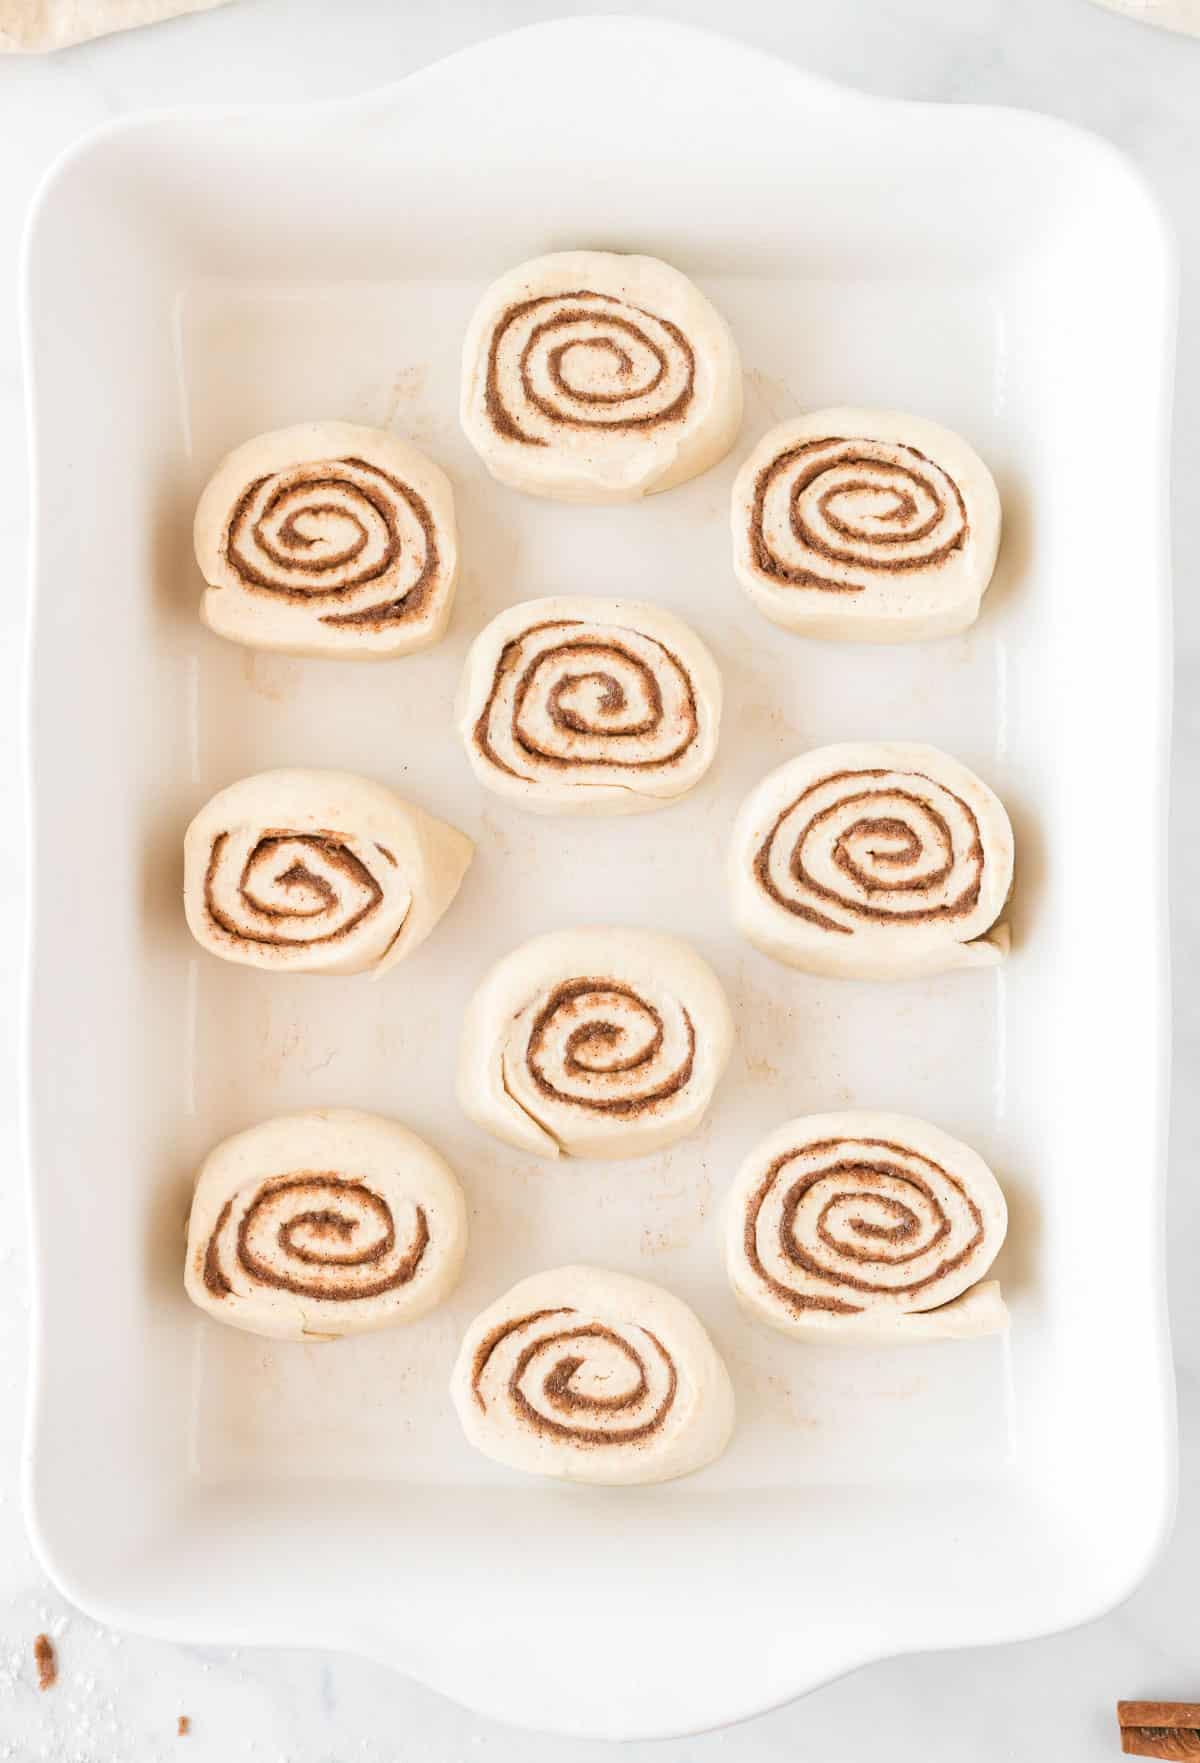 cinnamon rolls raw in the baking dish